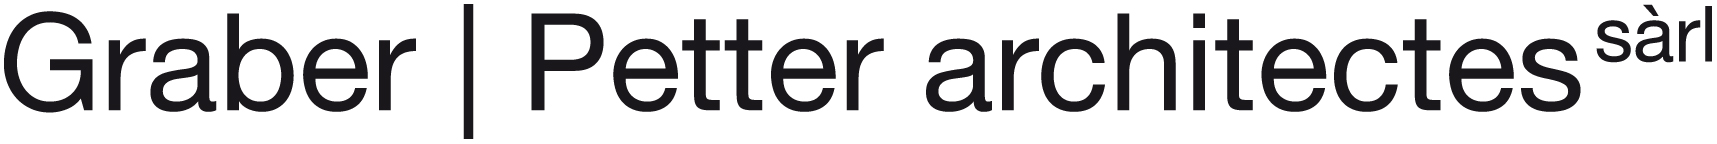 logo graber | petter architectes